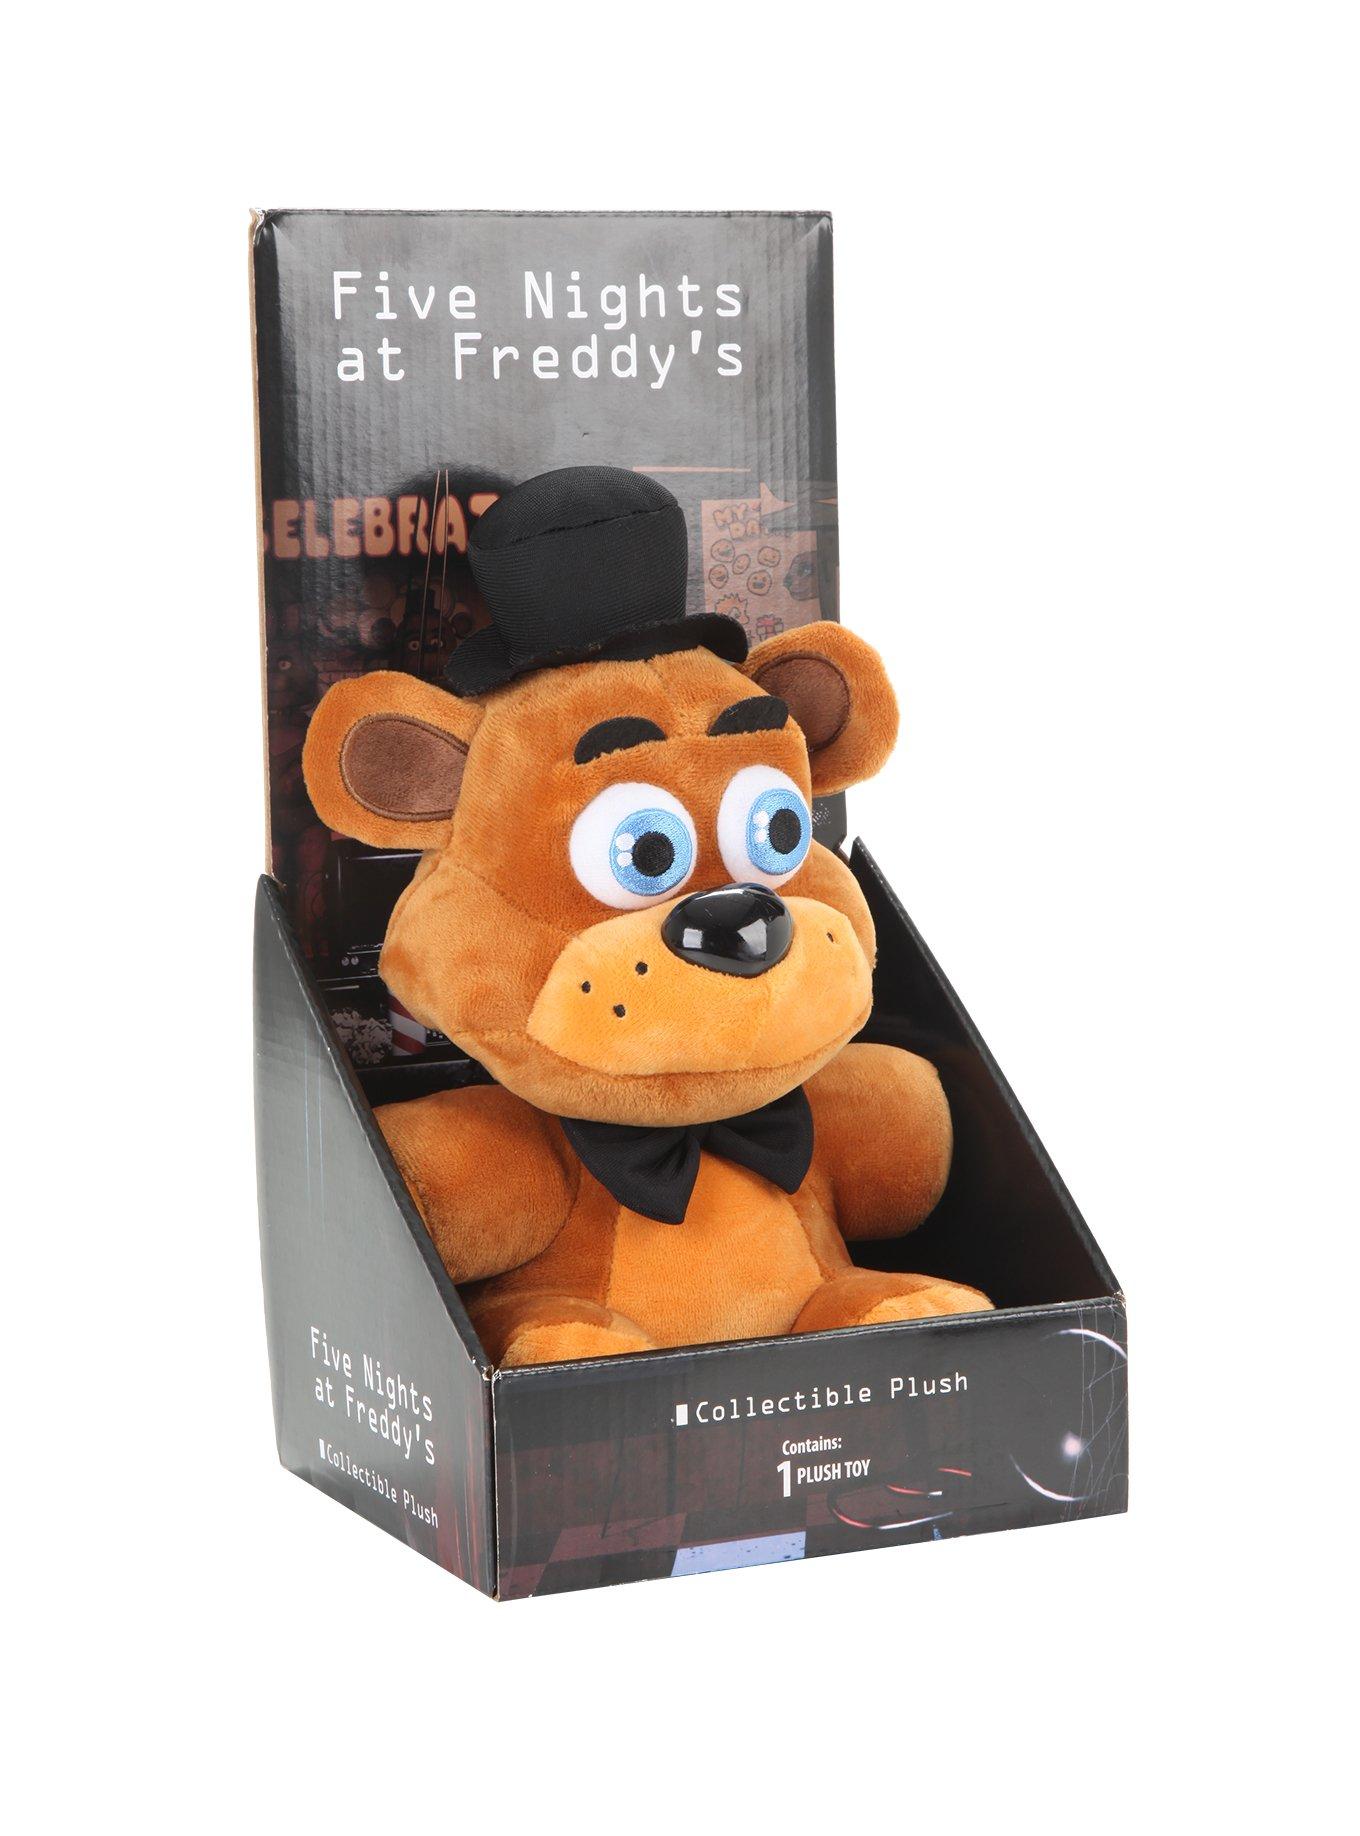 FNAF Freddy - Five Nights at Freddy's - PMF Store